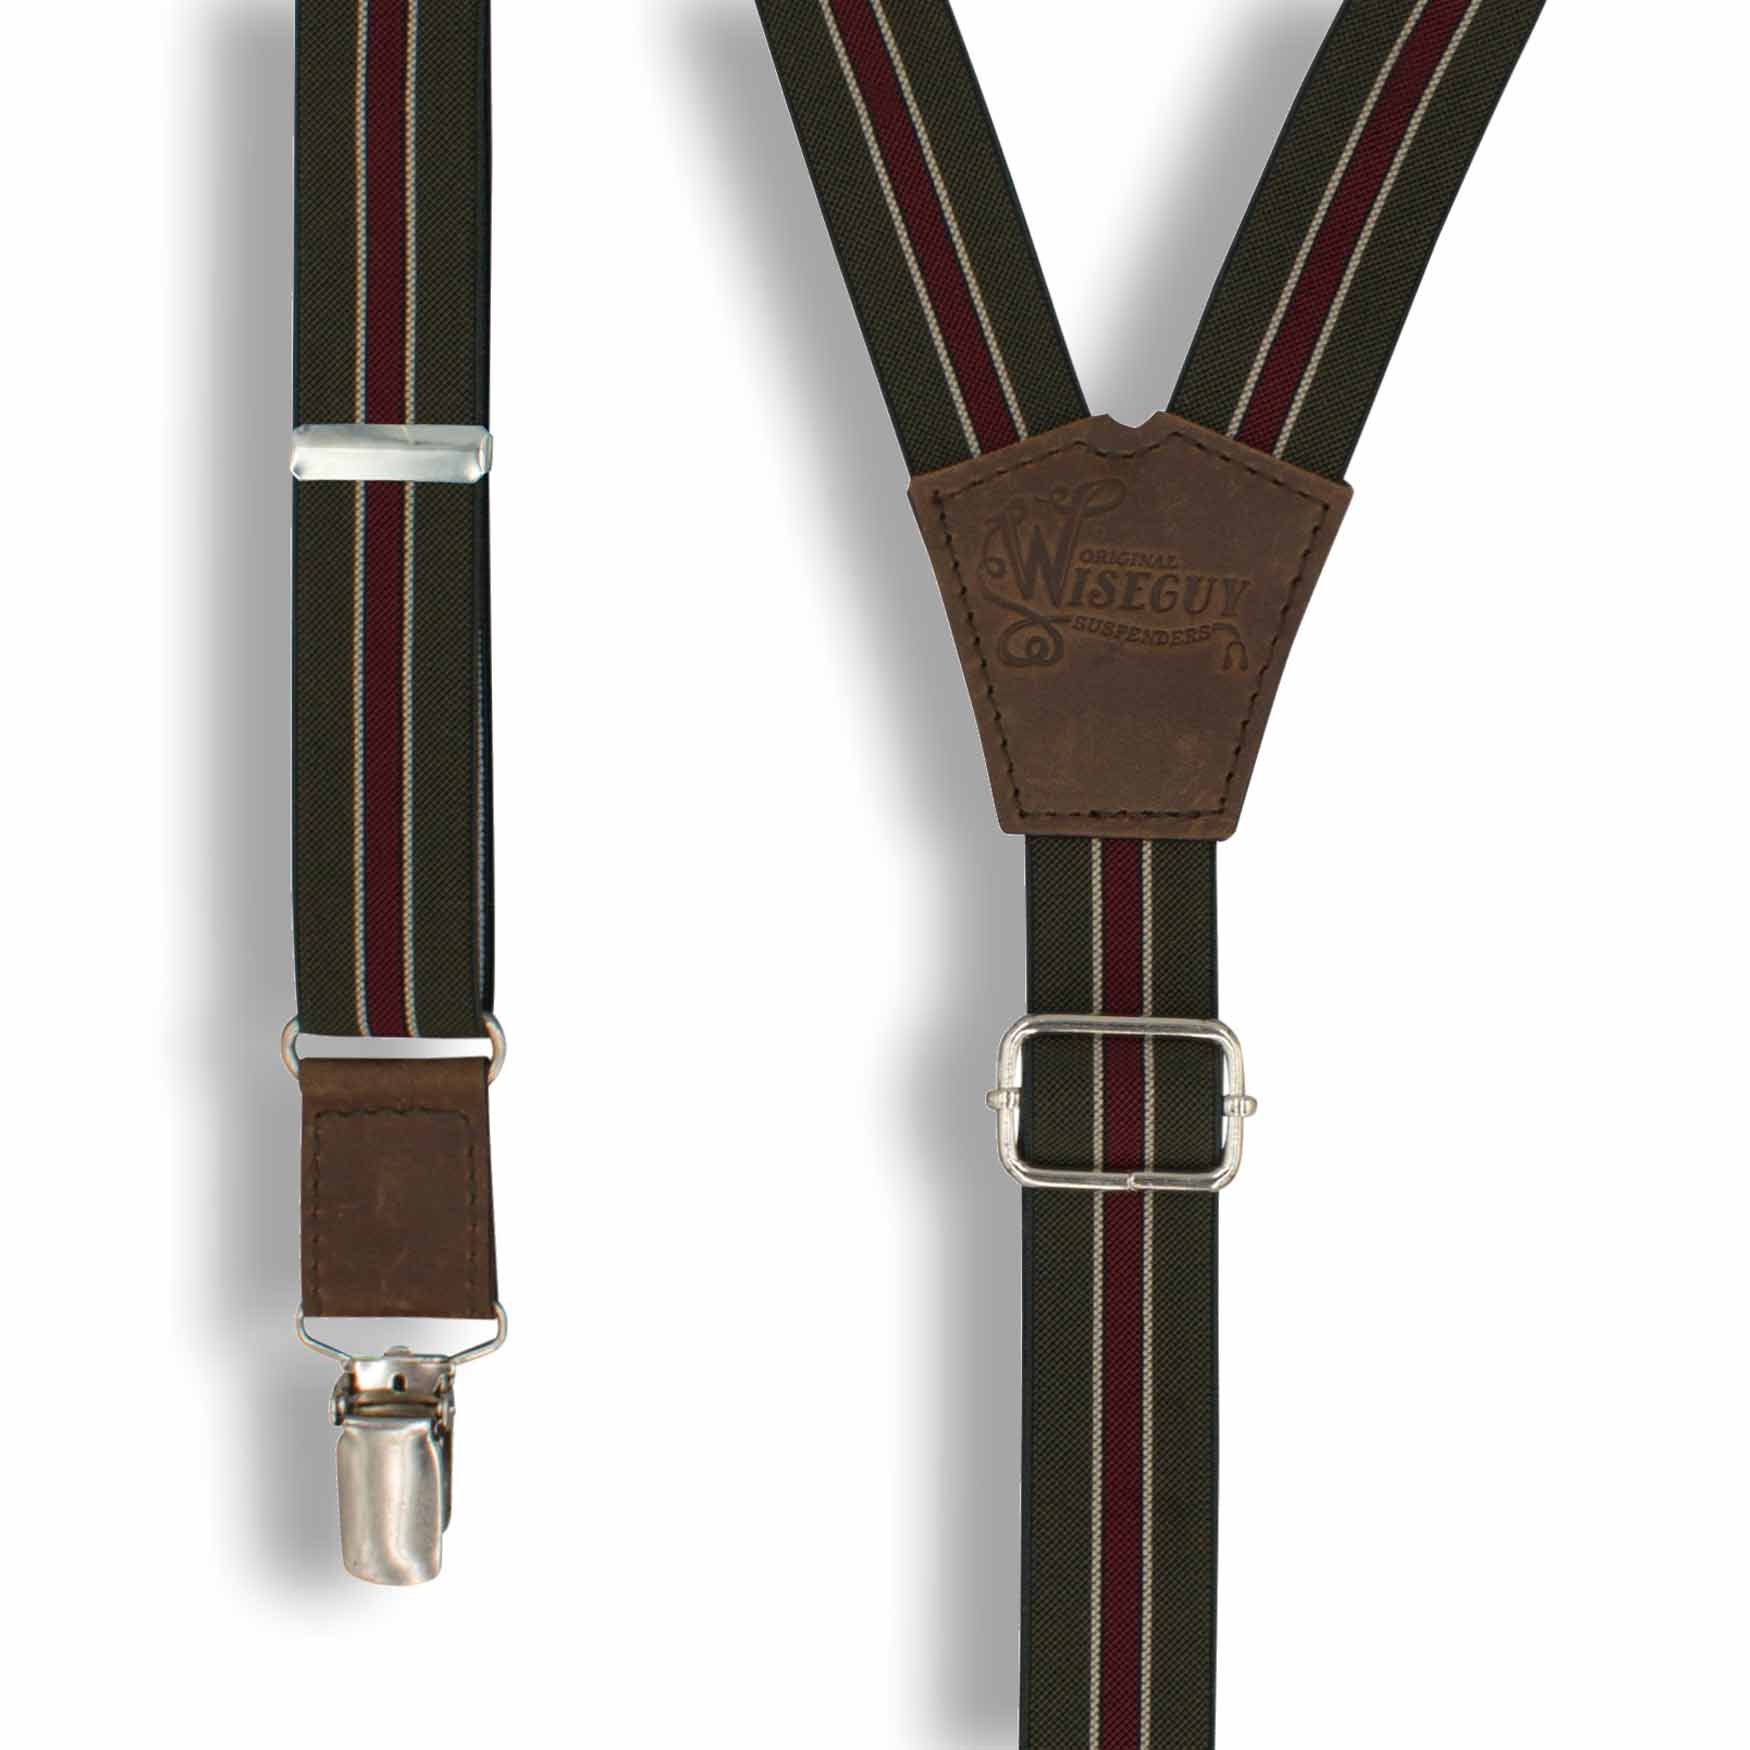 The Indy Speed Racing Suspenders slim straps (1 inch/2.54 cm) - Wiseguy Suspenders